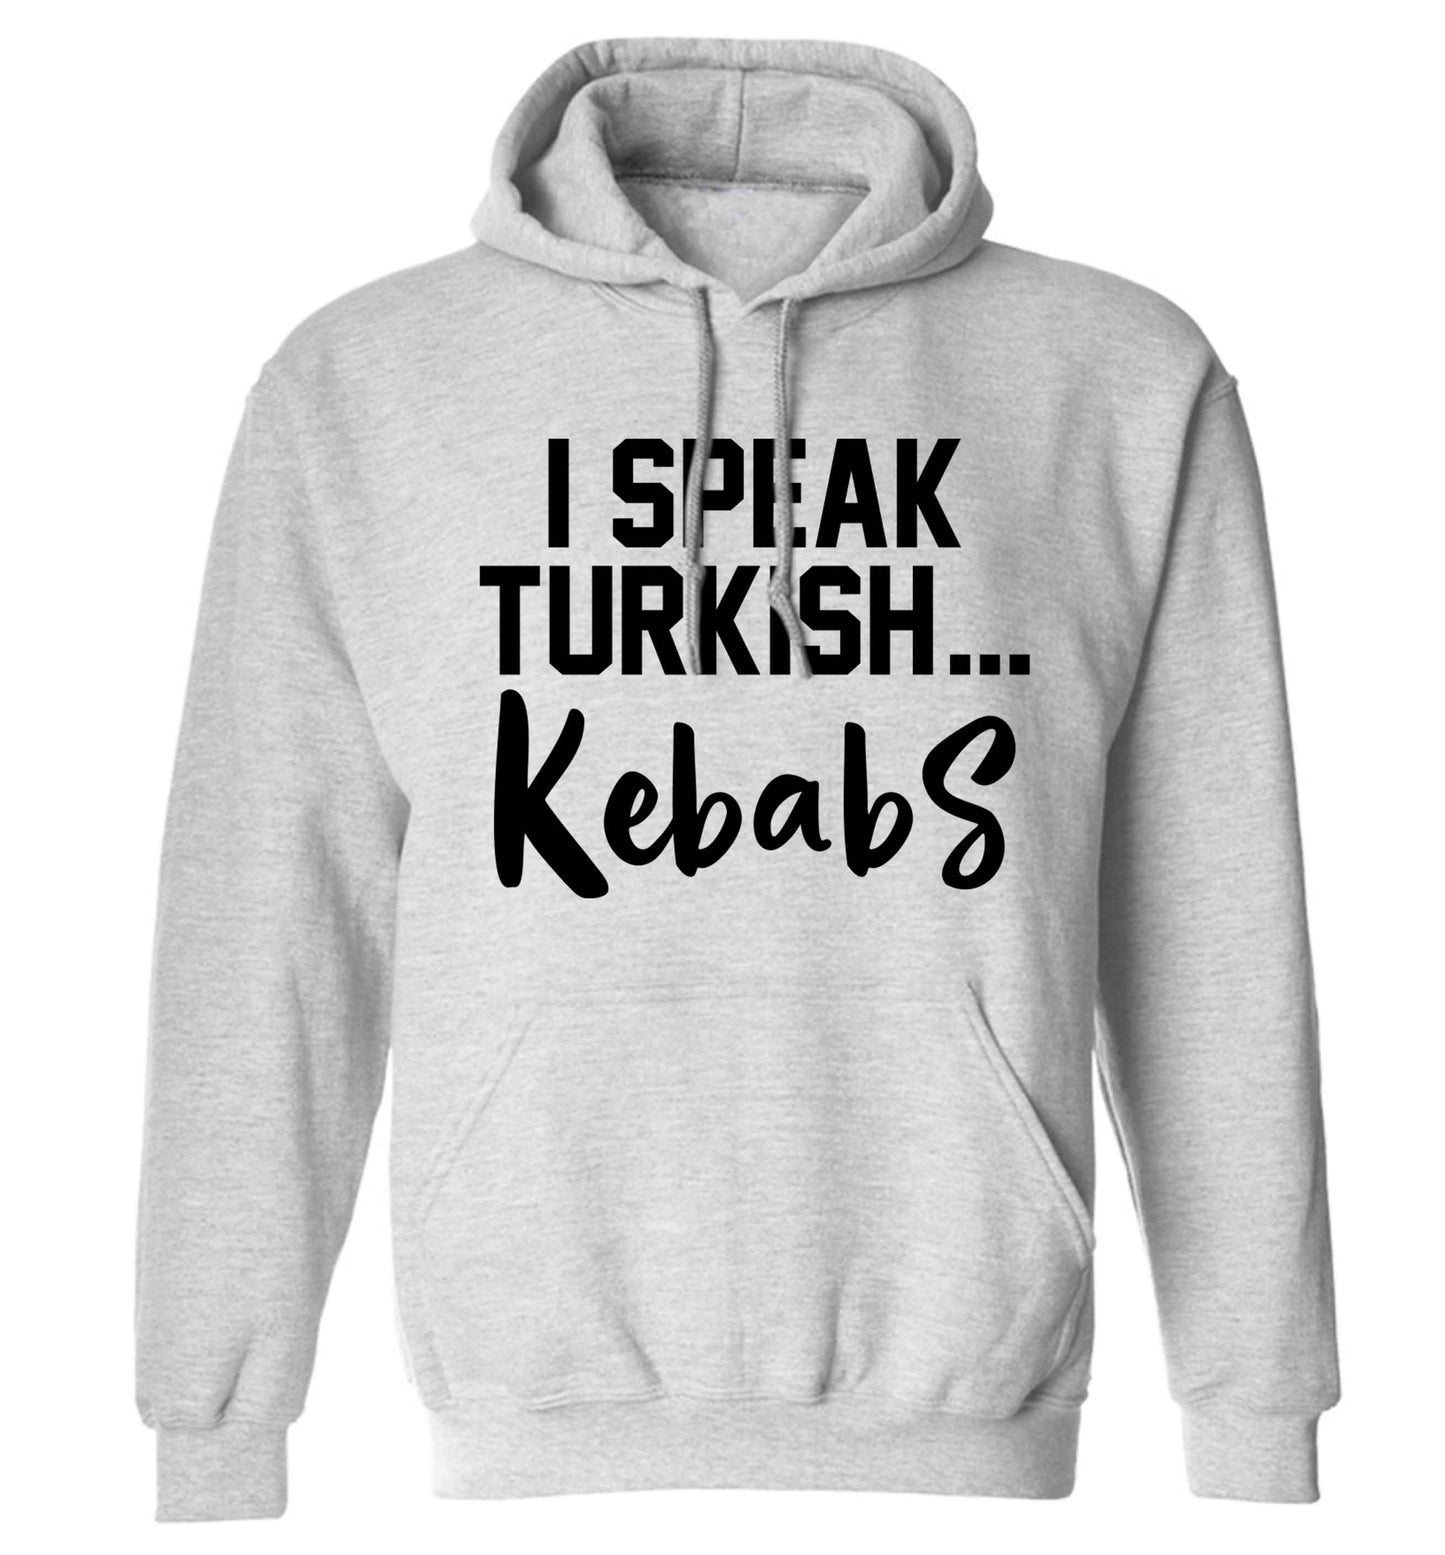 I speak Turkish...kebabs adults unisex grey hoodie 2XL